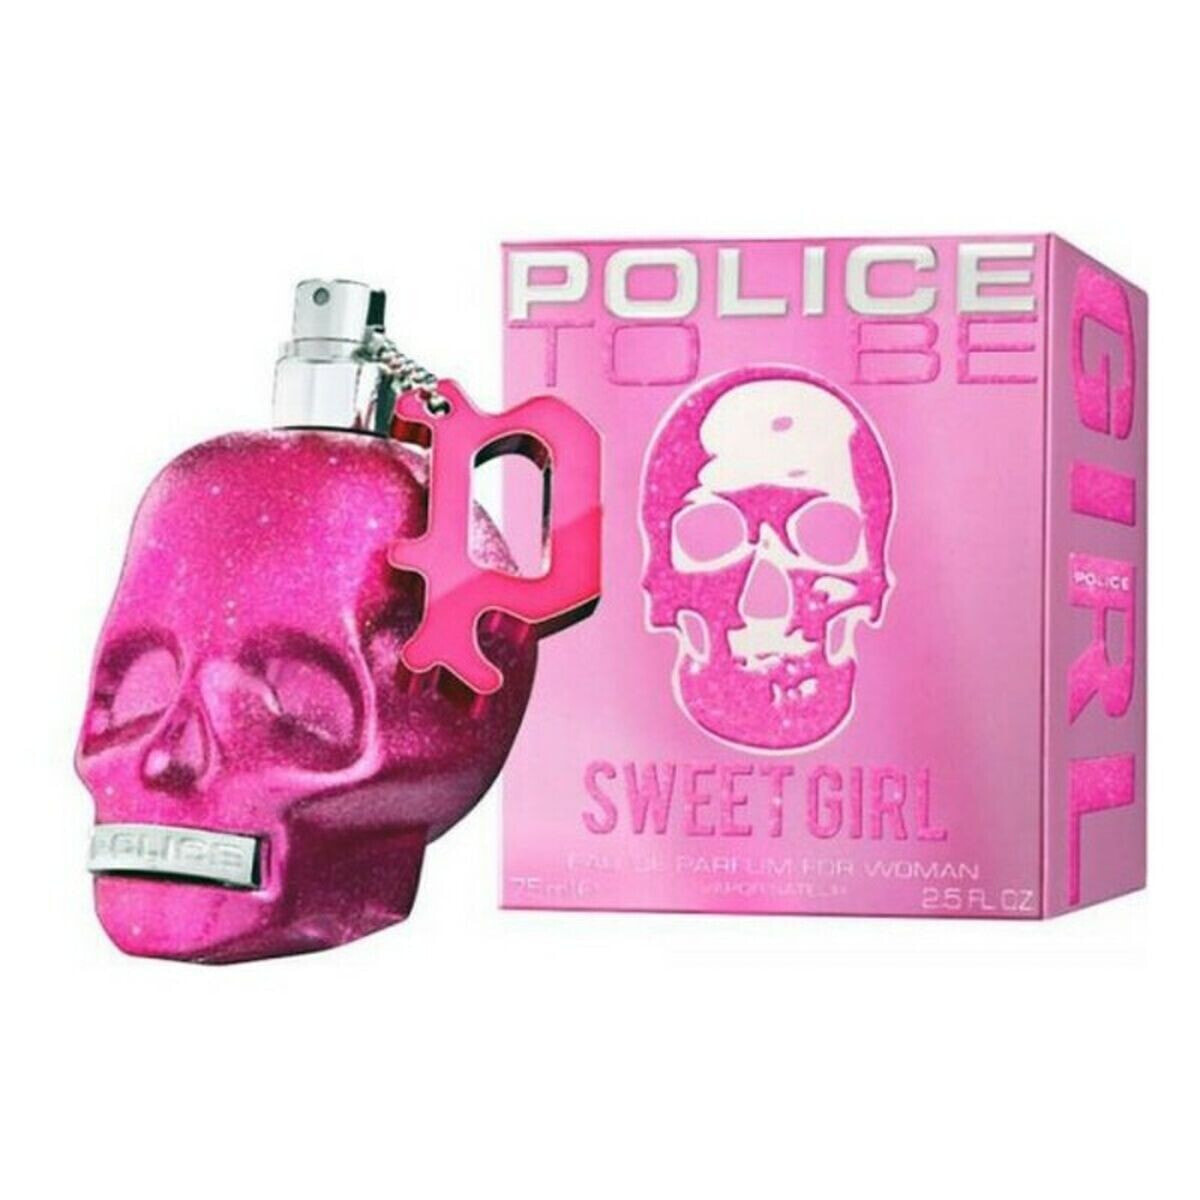 Женская парфюмерия To Be Sweet Girl Police